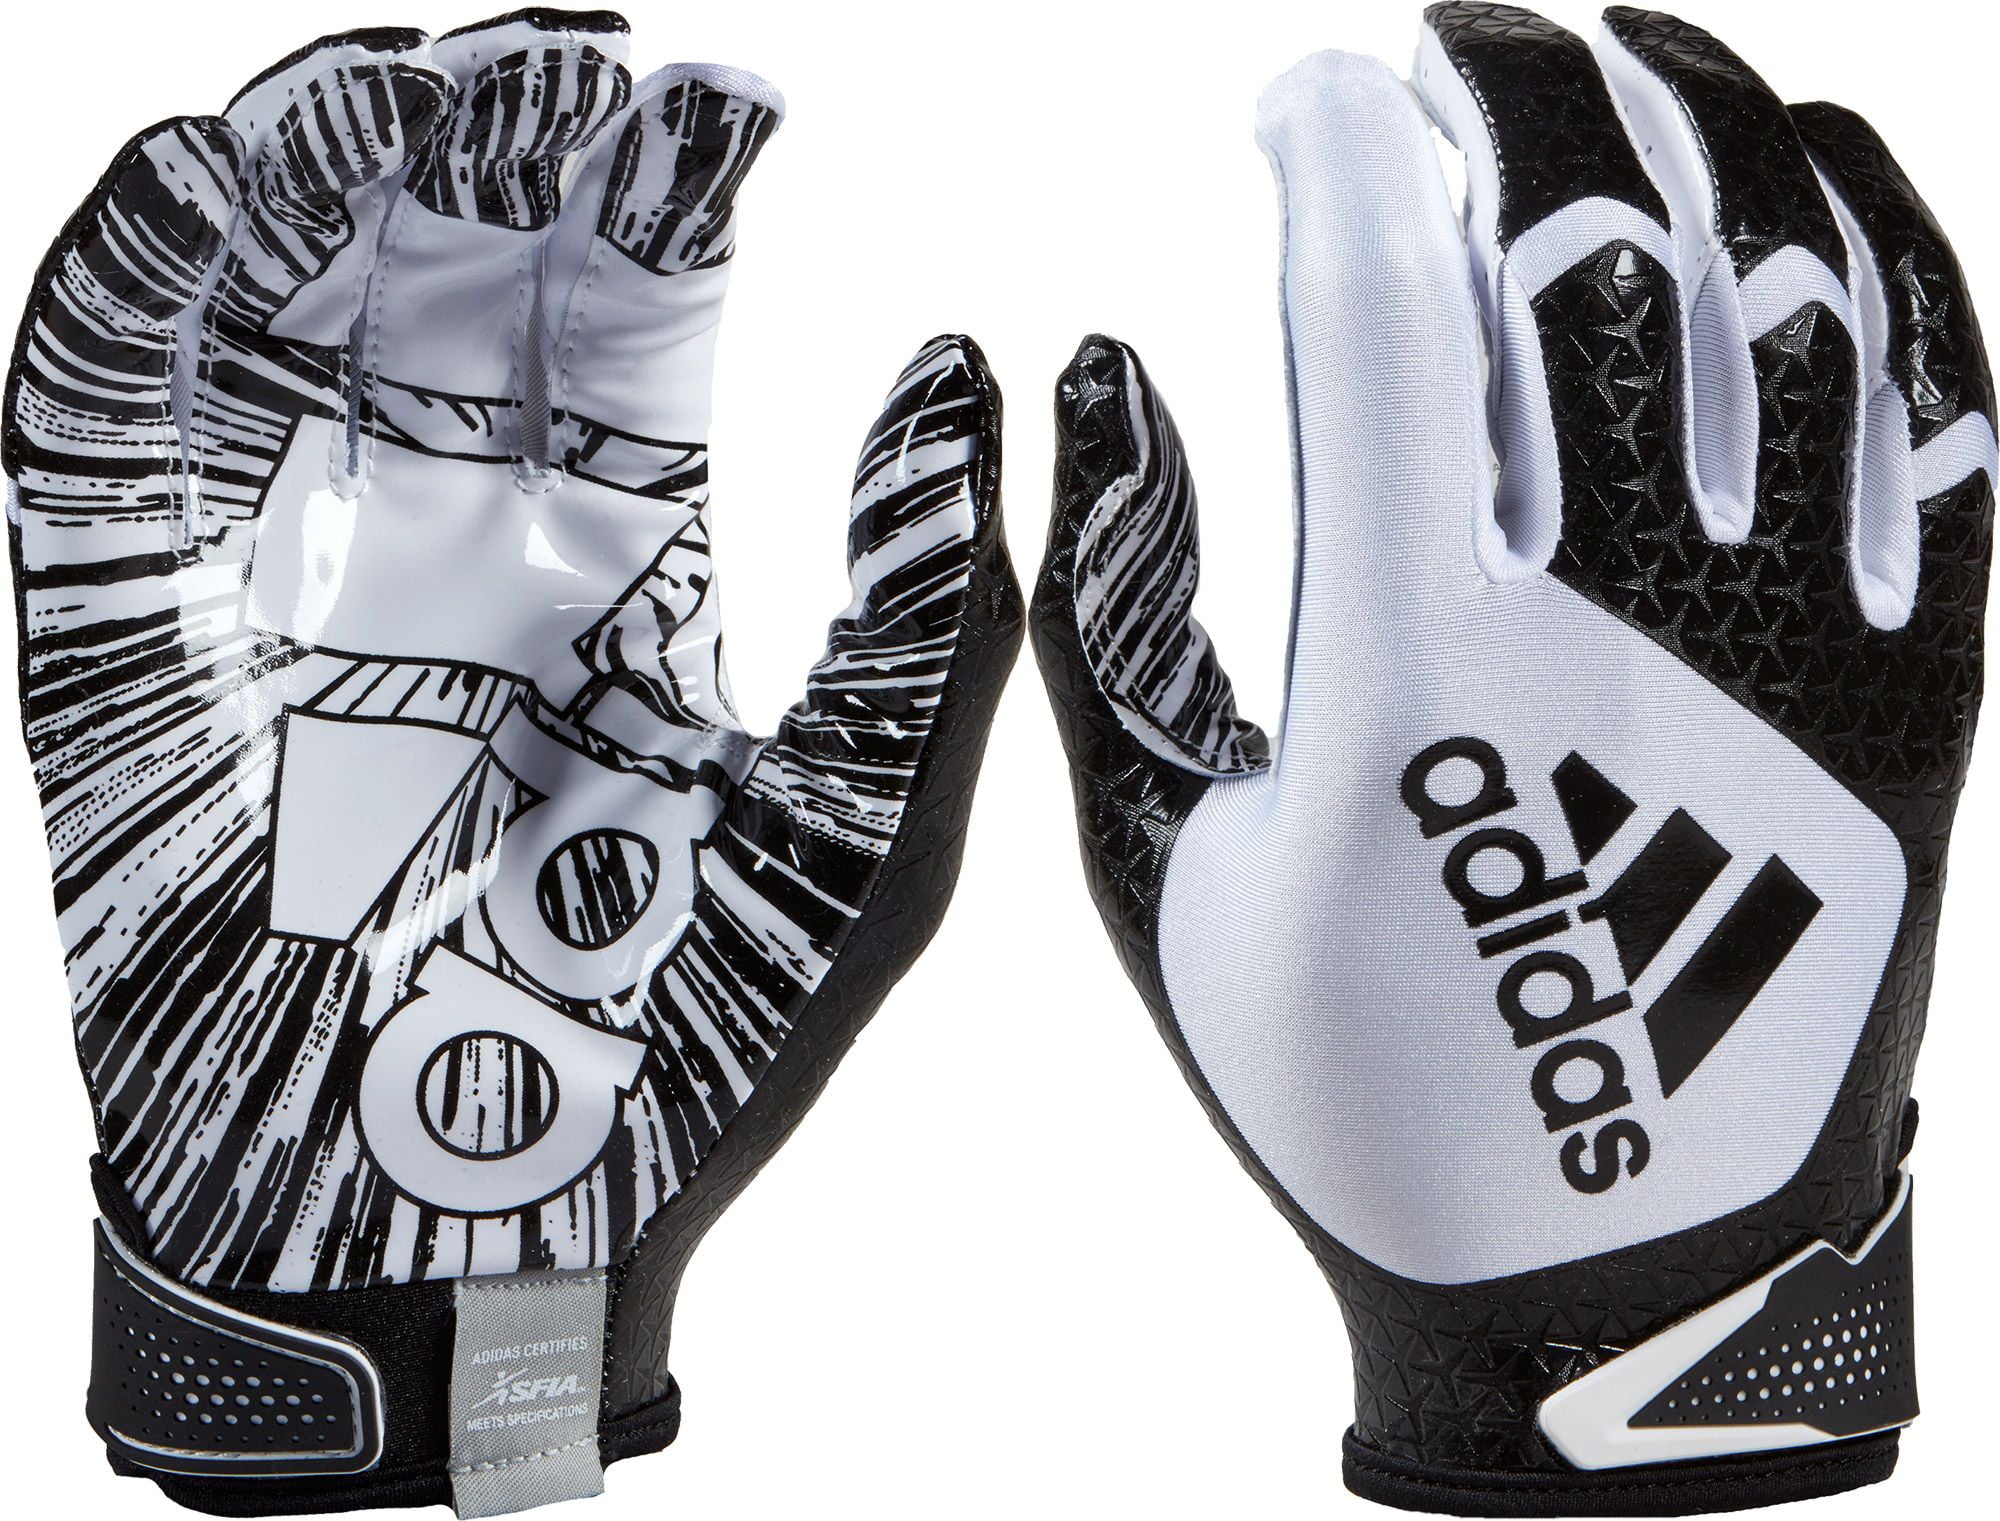 adidas scorch light 5 gloves